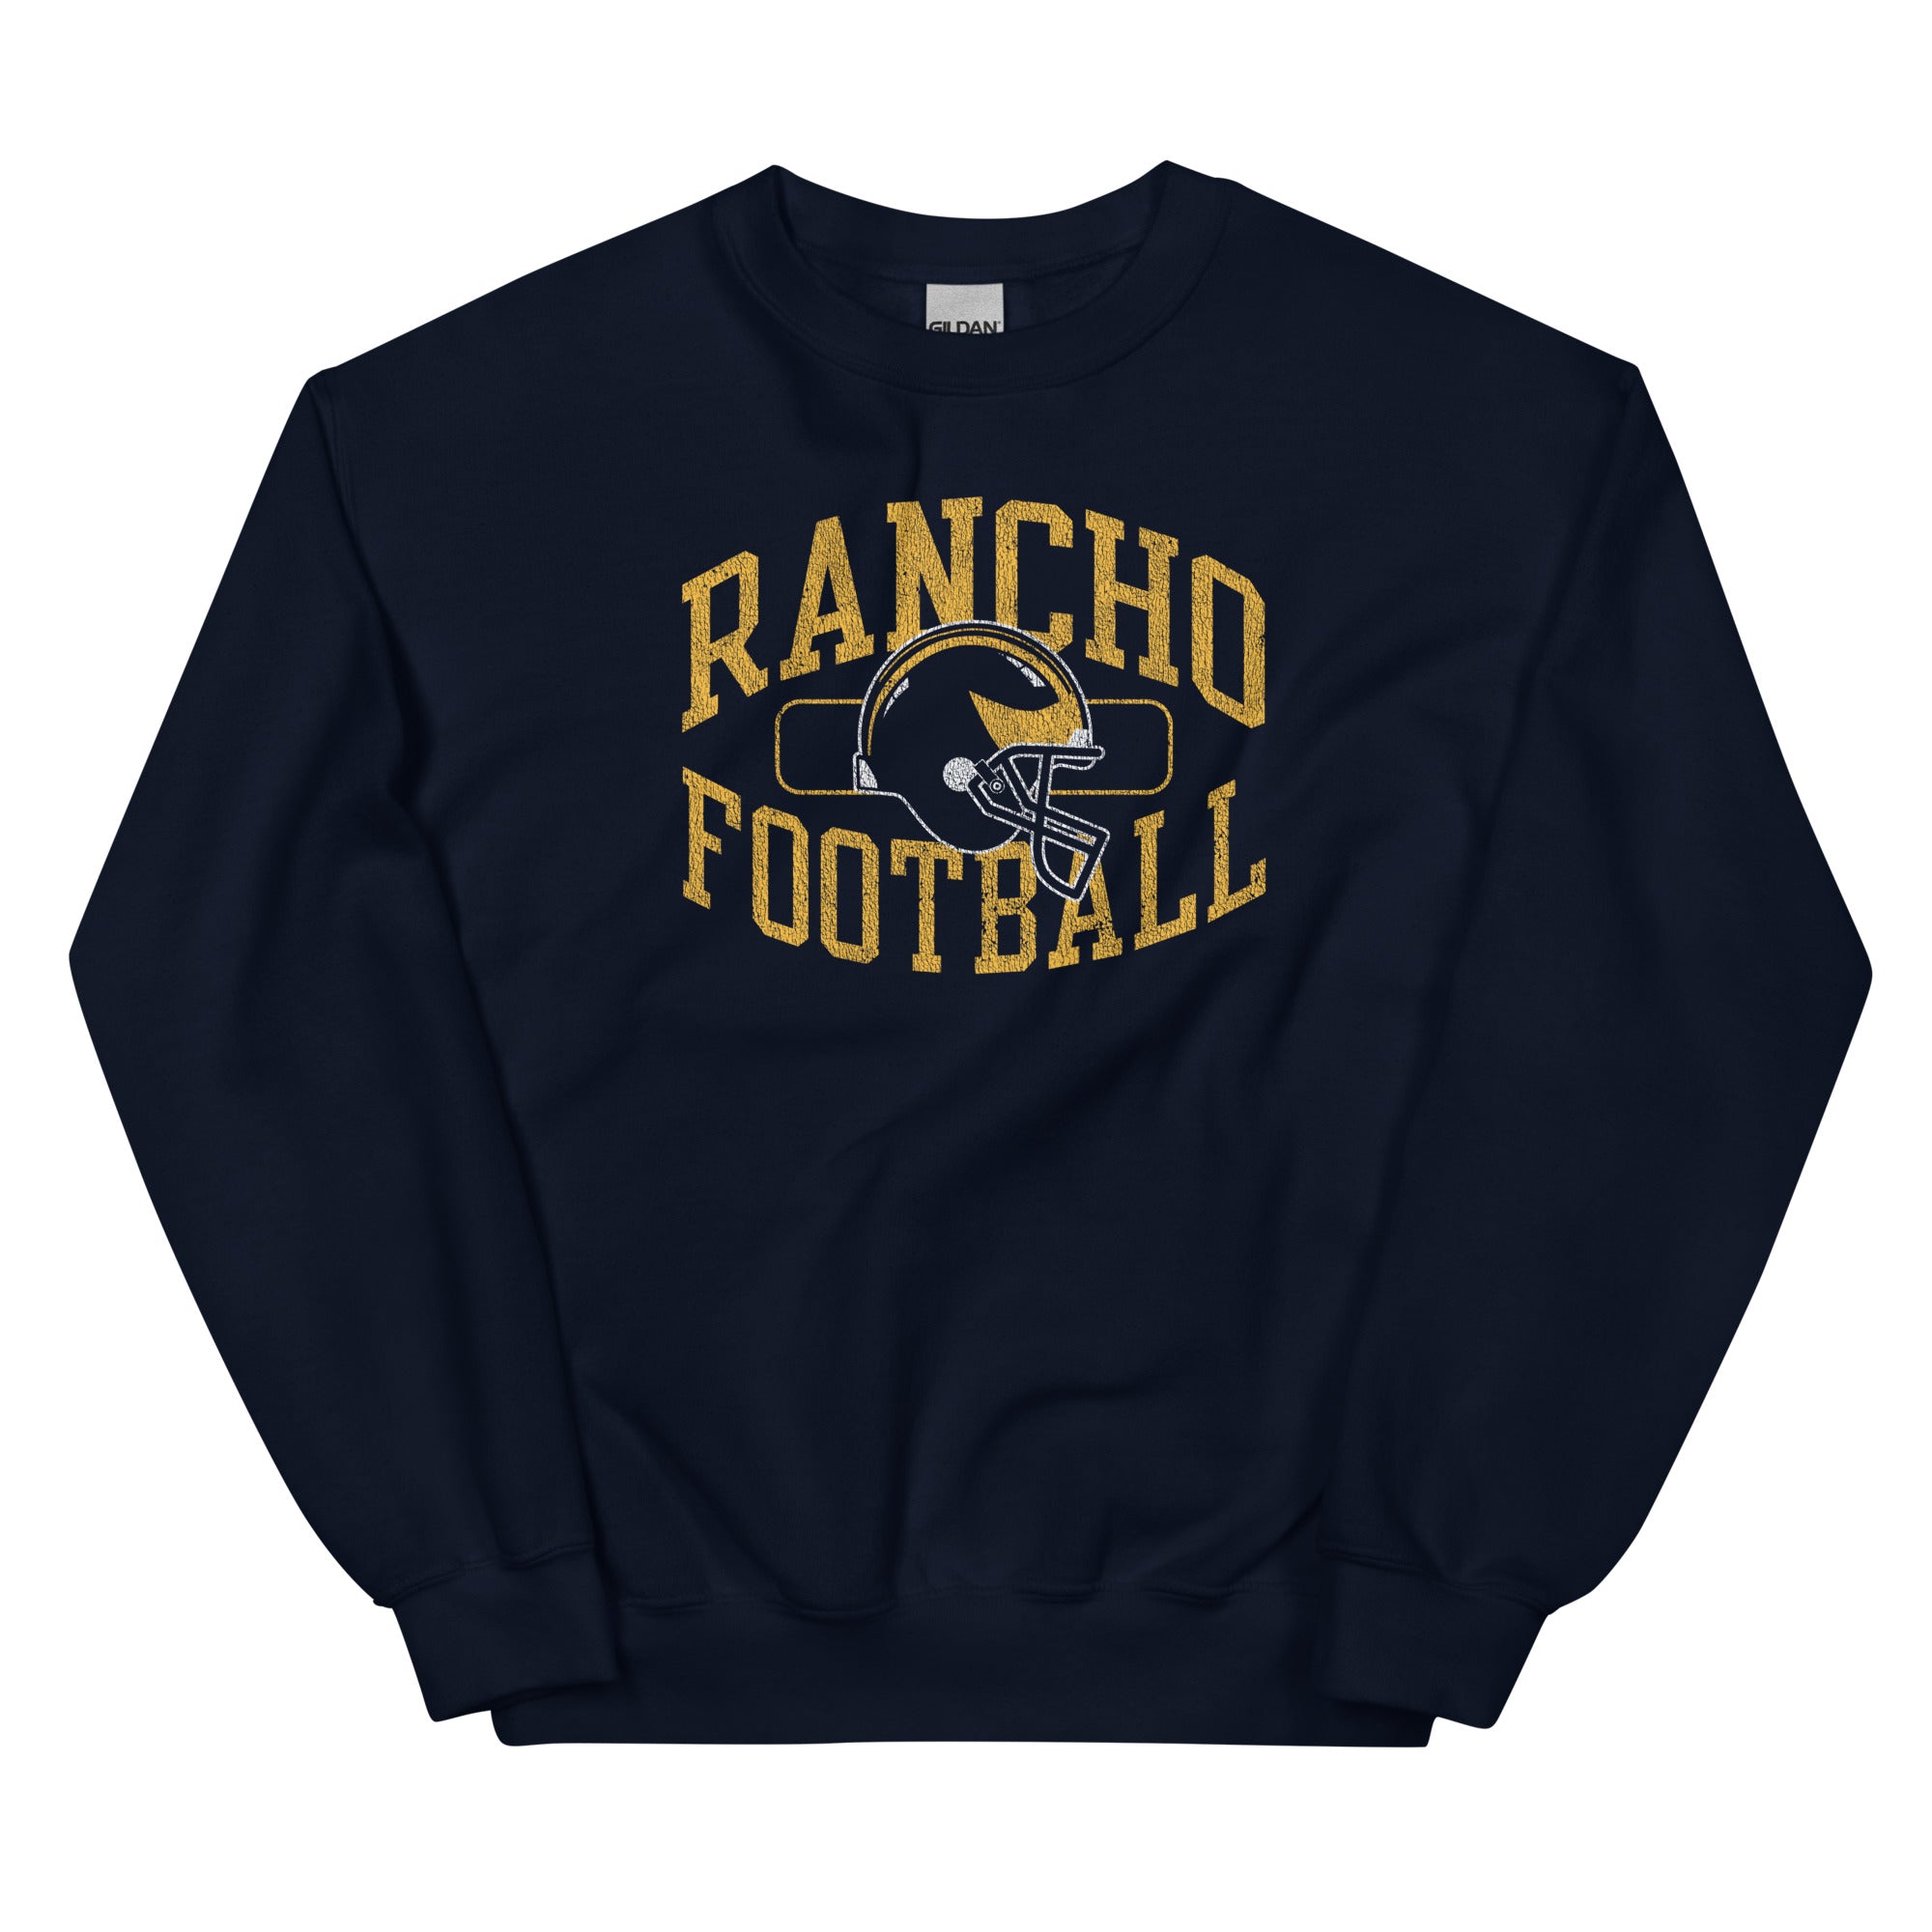 Rancho Christian Unisex Crew Neck Sweatshirt